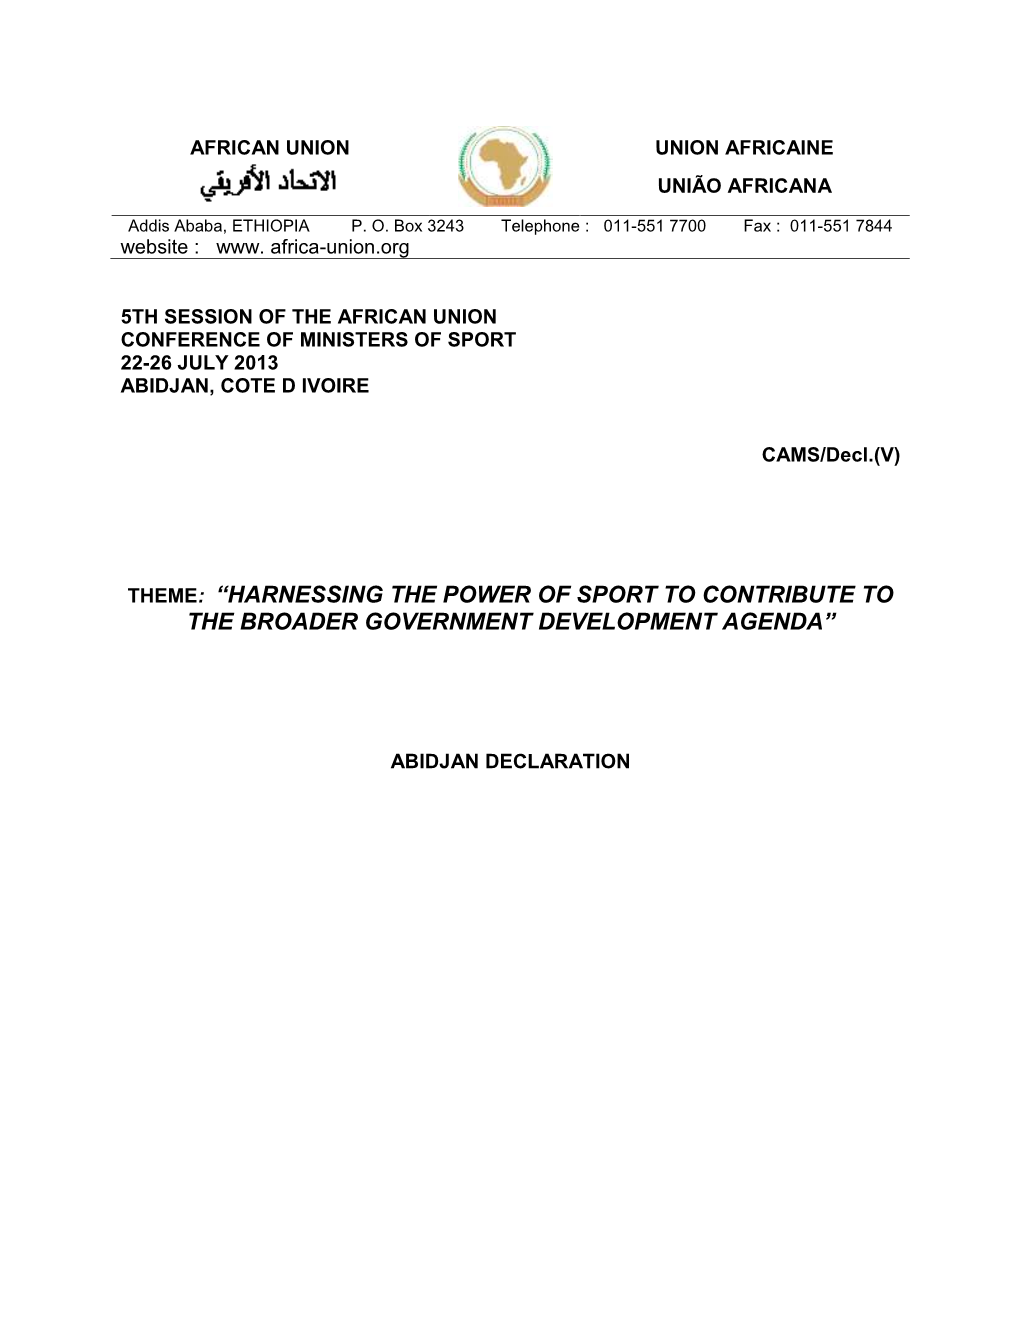 Abidjan Declaration